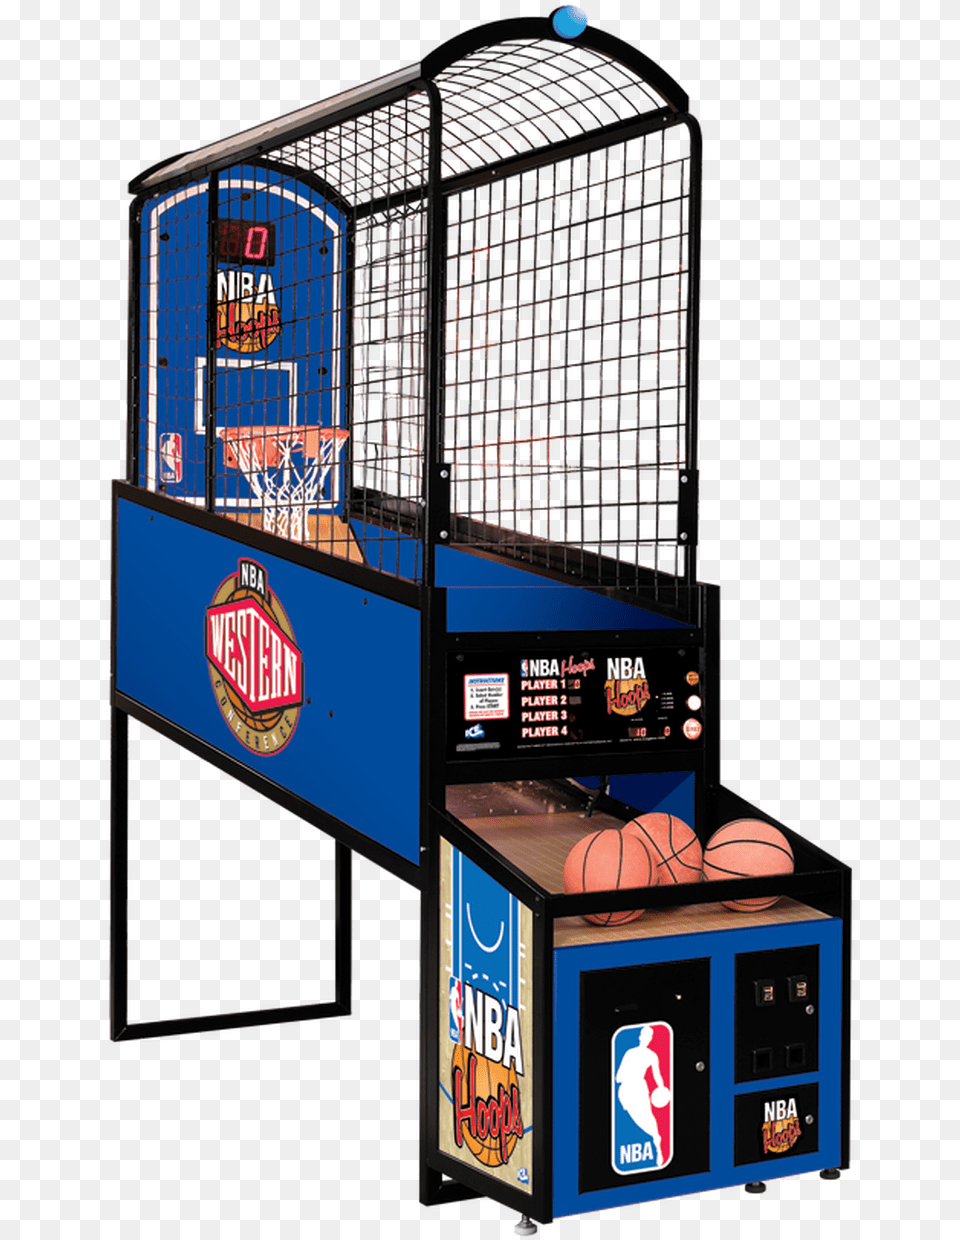 Nba Hoops Basketball Arcade Pop A Shot Spurs Basketball Arcade Game, Ball, Basketball (ball), Sport, Arcade Game Machine Free Png Download